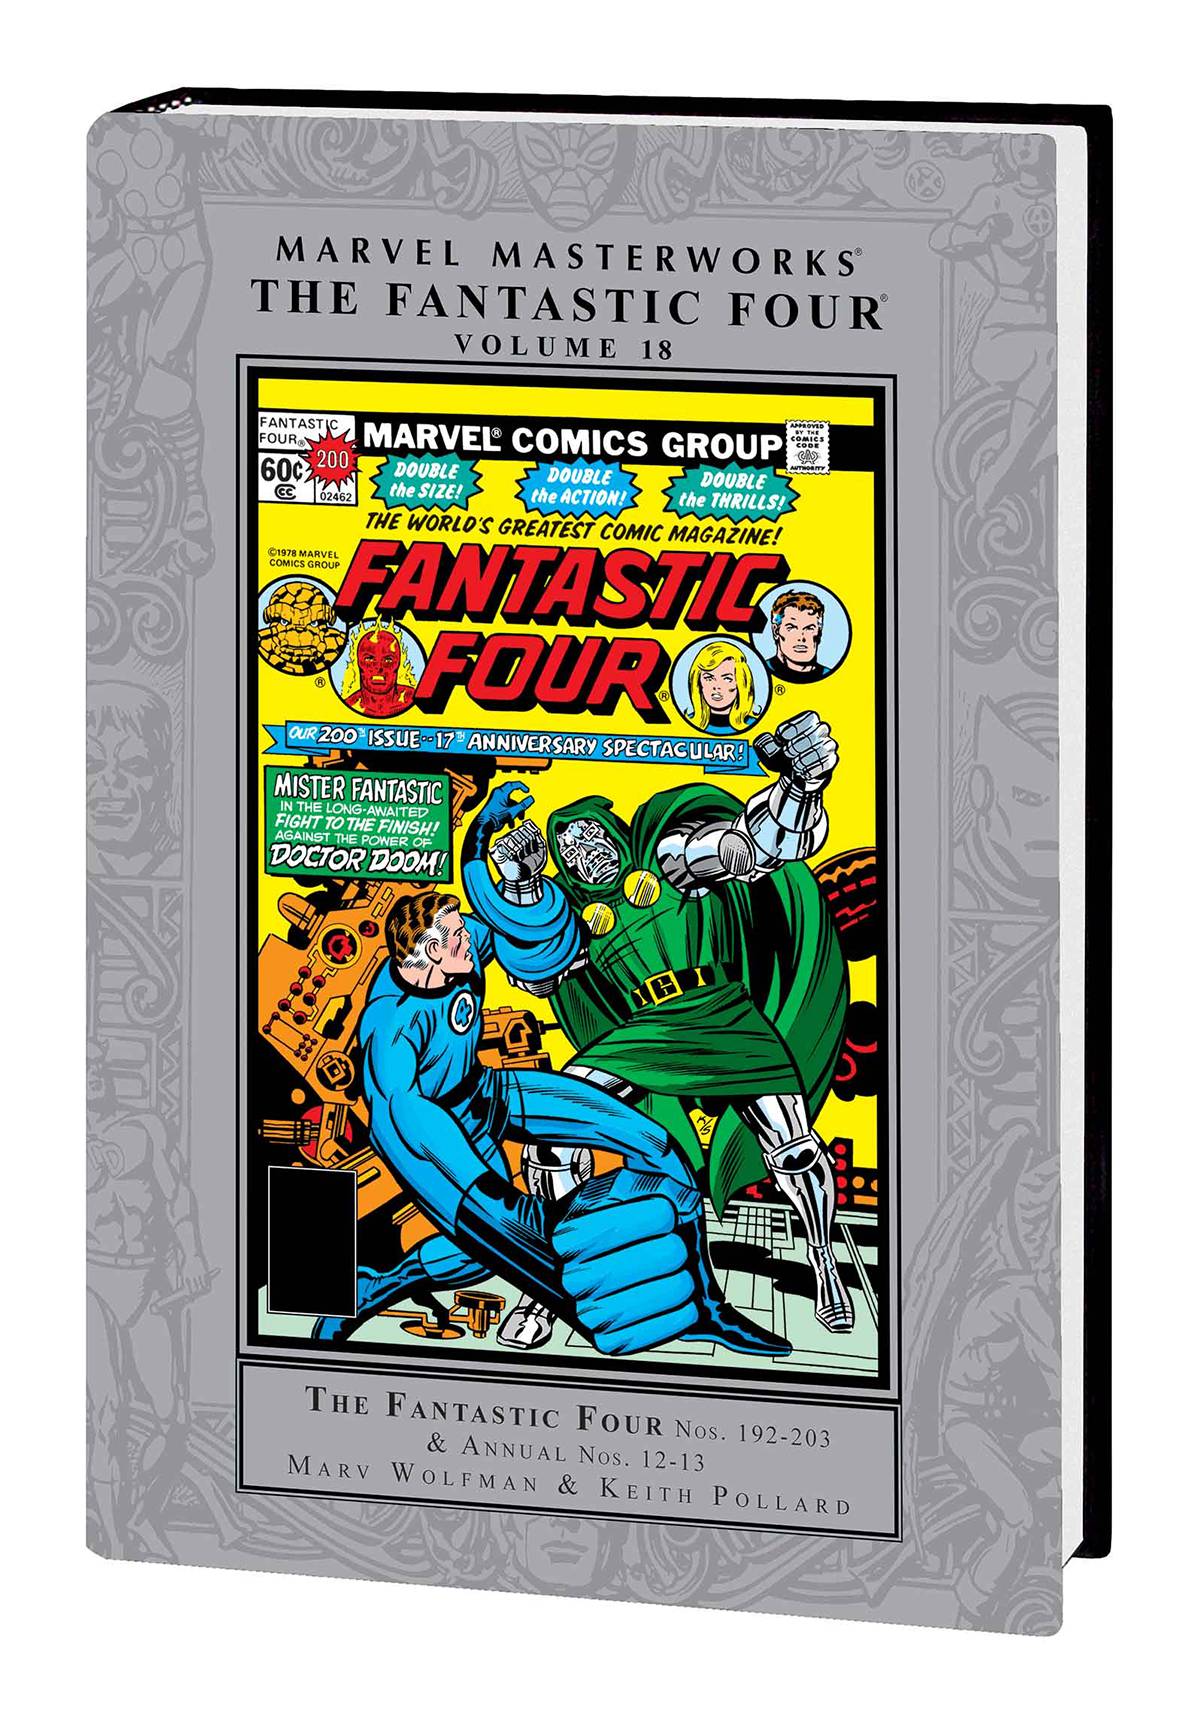 Marvel Masterworks Fantastic Four Hardcover Volume 18